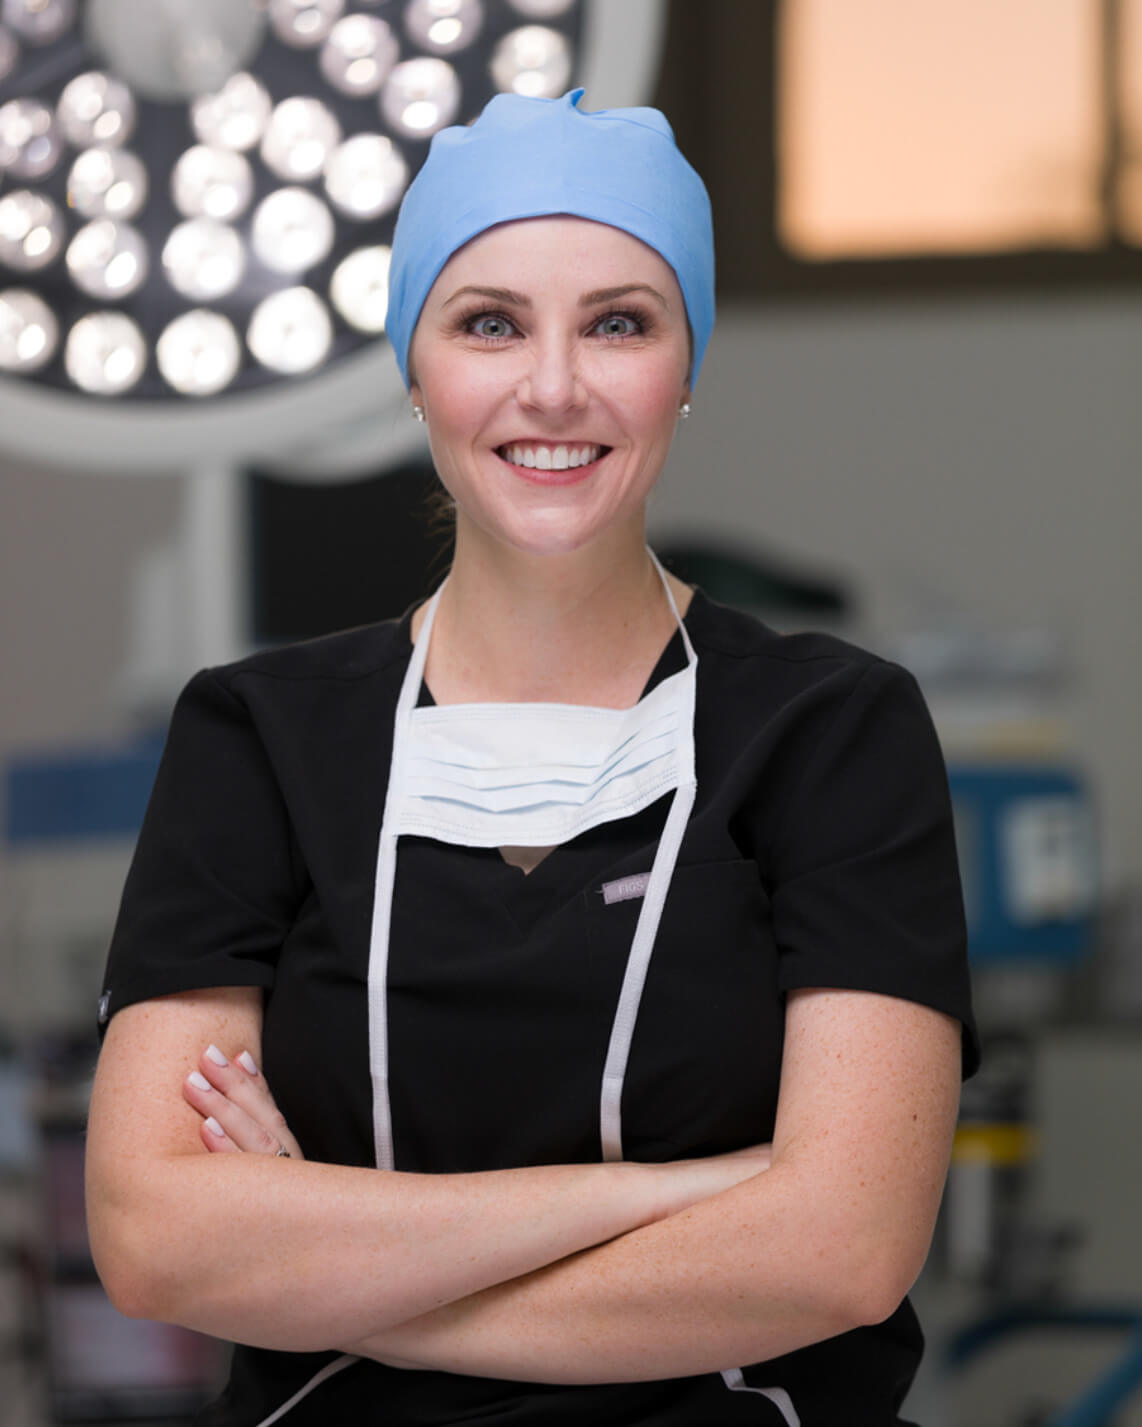 Dr. Ashley Howarth - Ruptured breast implant specialist Scottsdale AZ